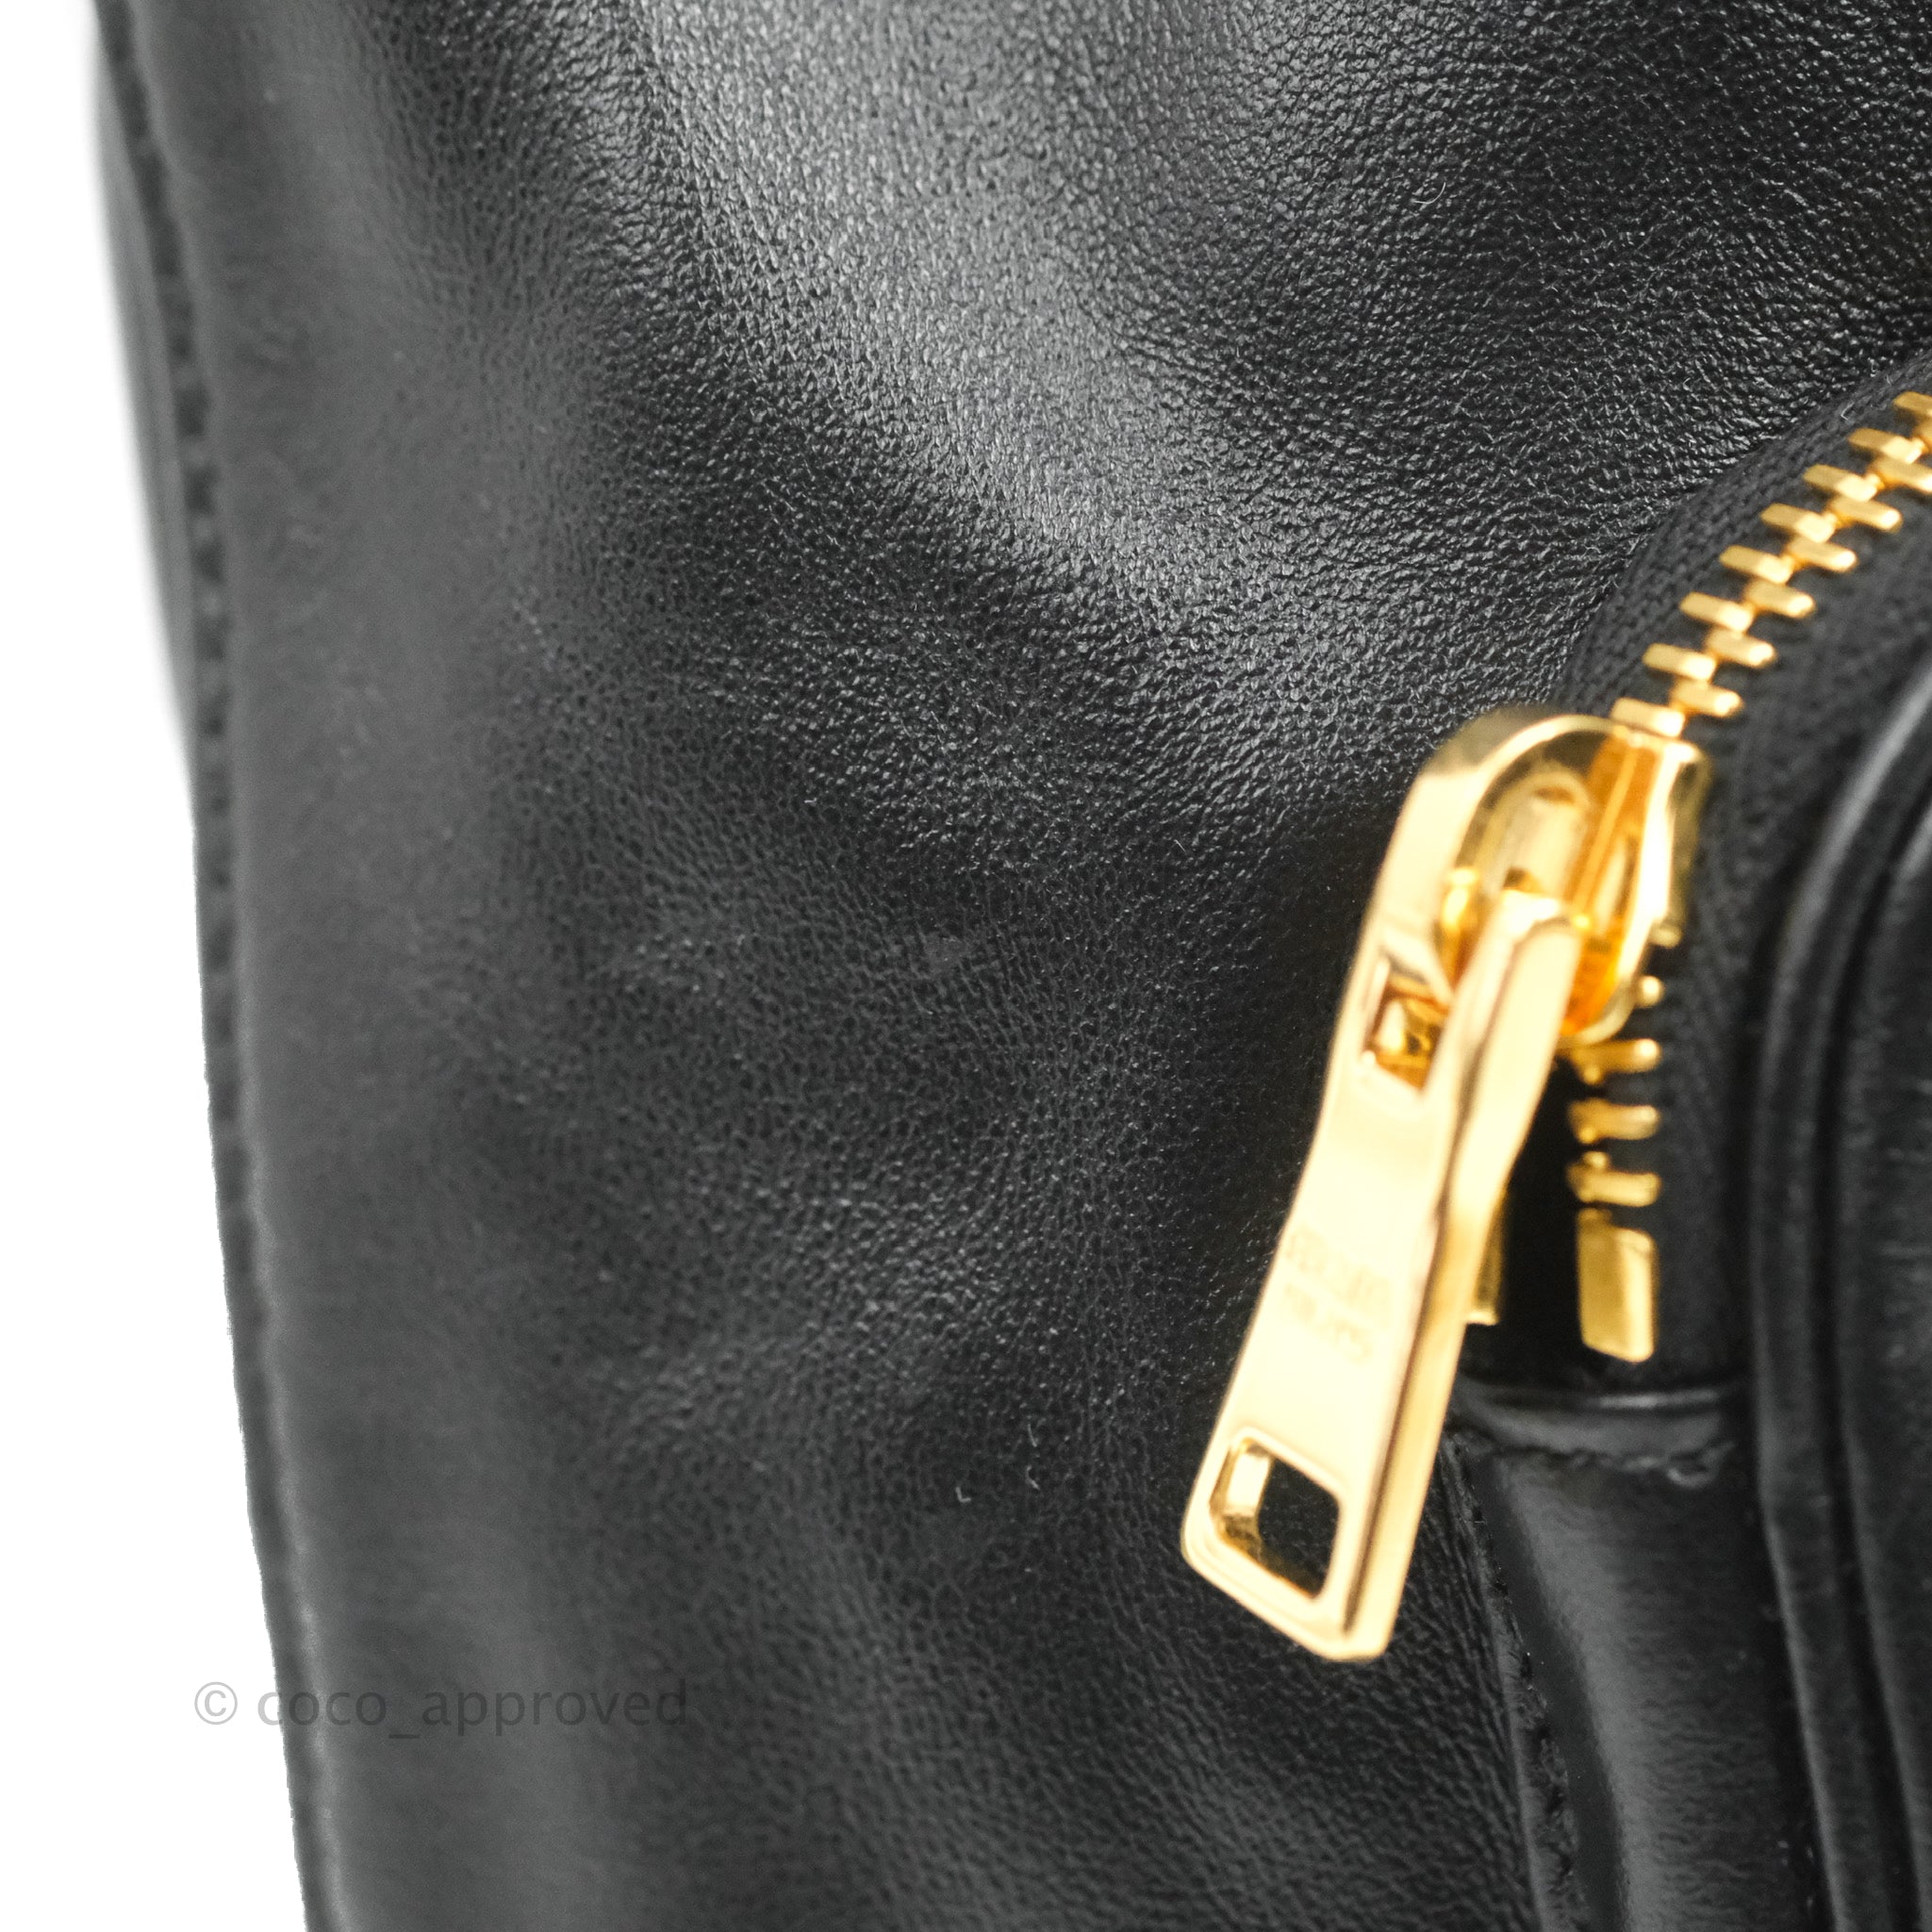 Prada Duet Bucket Bag Black Leather – Coco Approved Studio